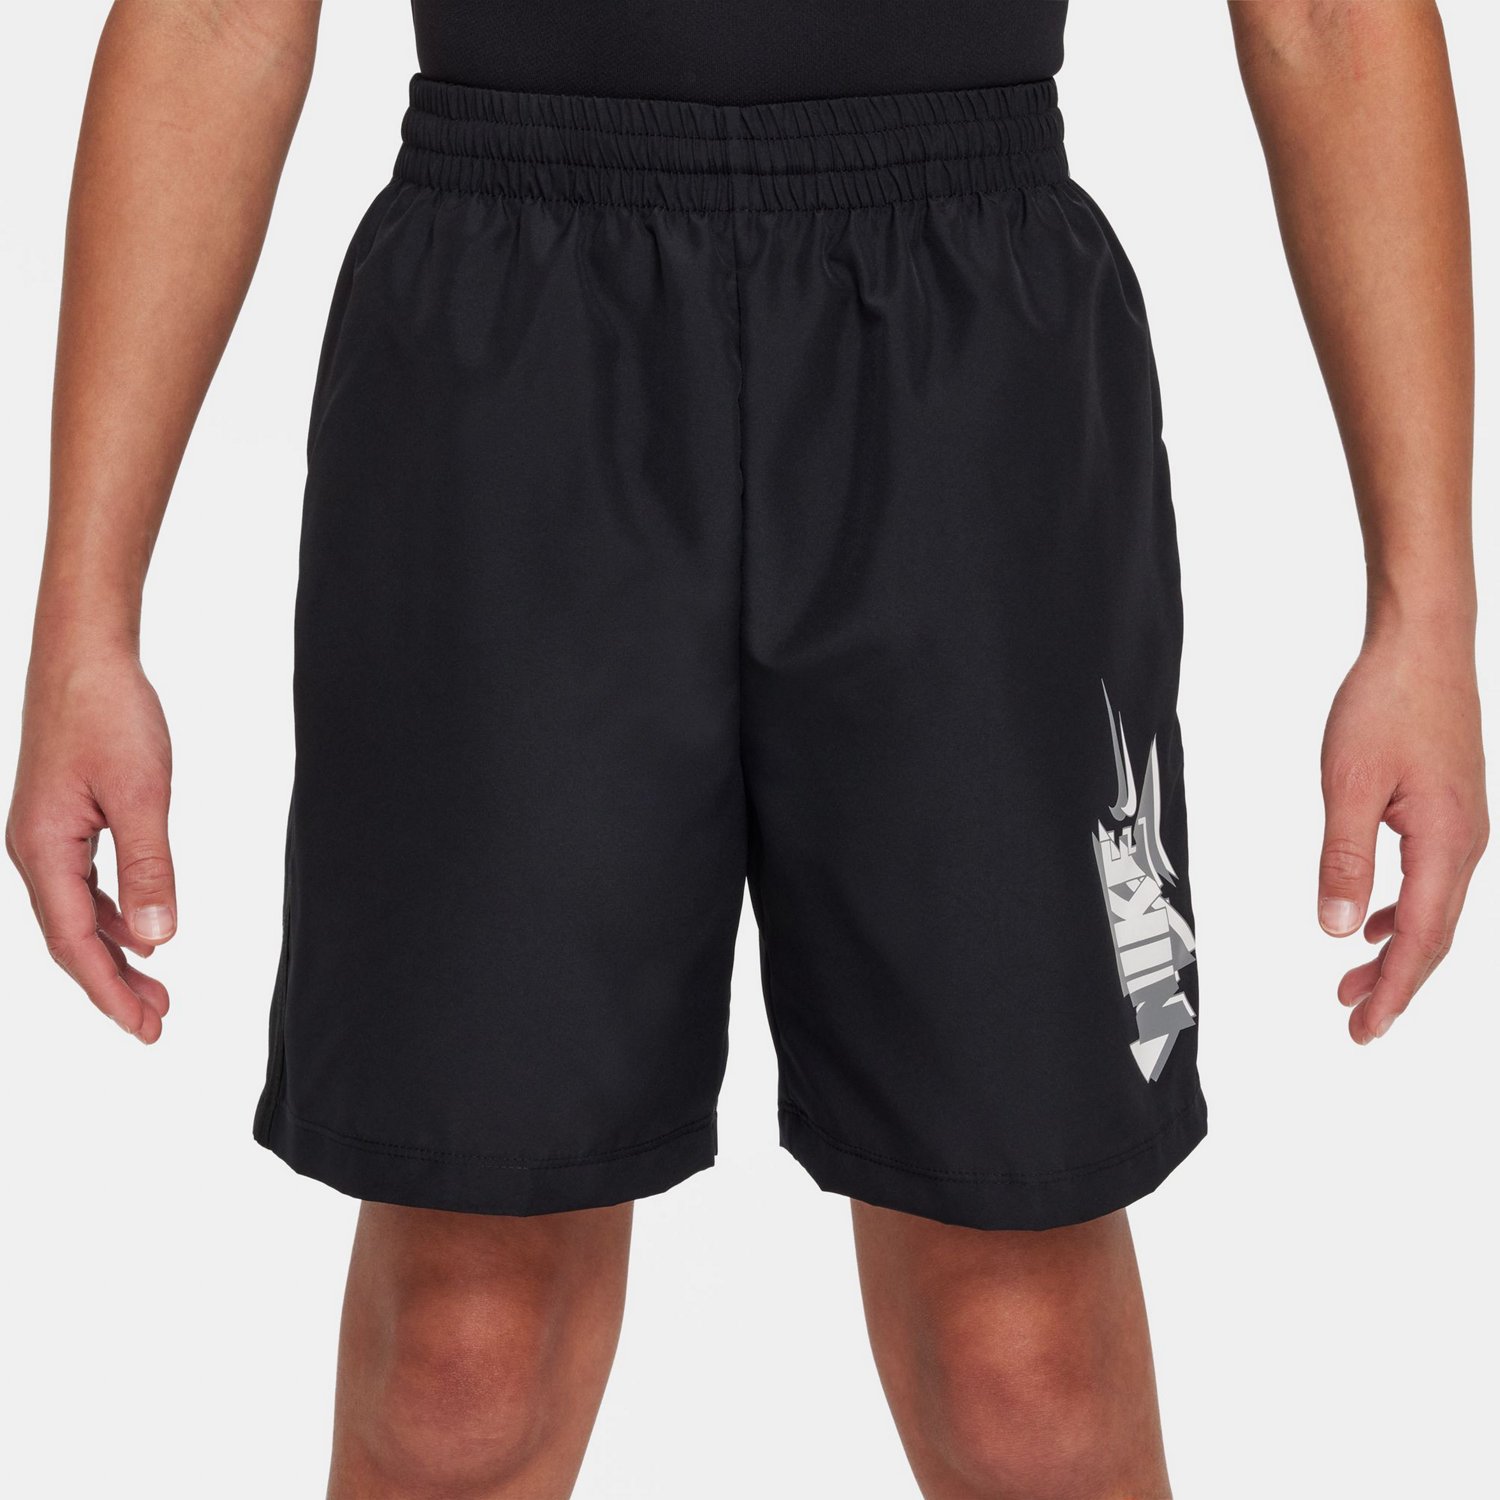 Buy Nike Dri-Fit Shorts Boys Black online